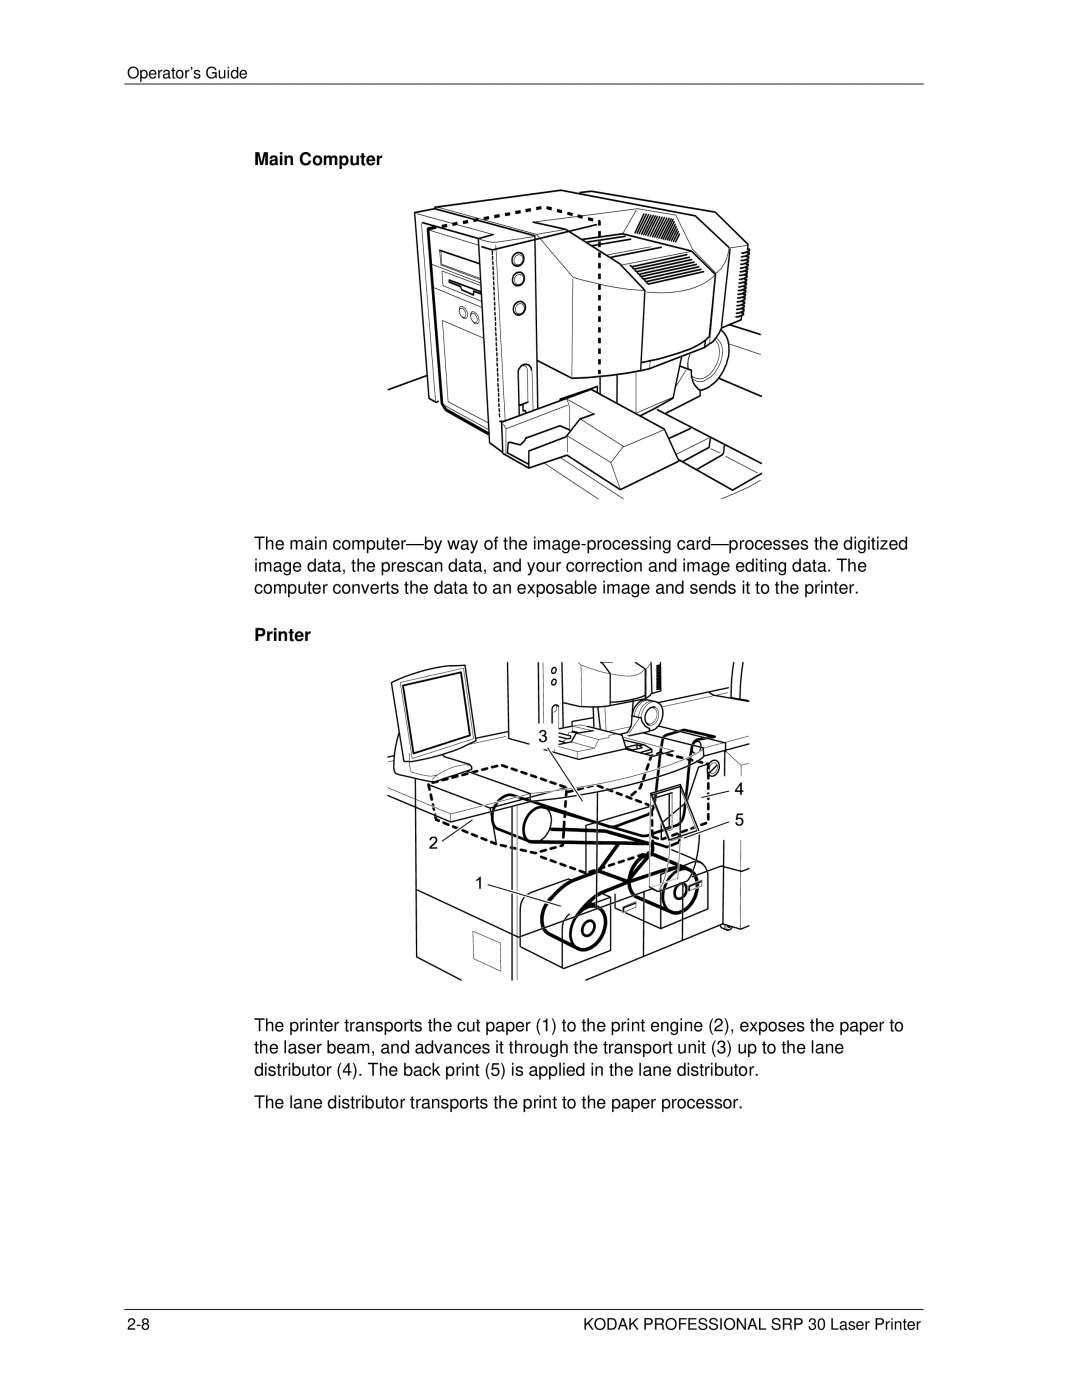 Kodak SRP 30 manual Main Computer, Printer 